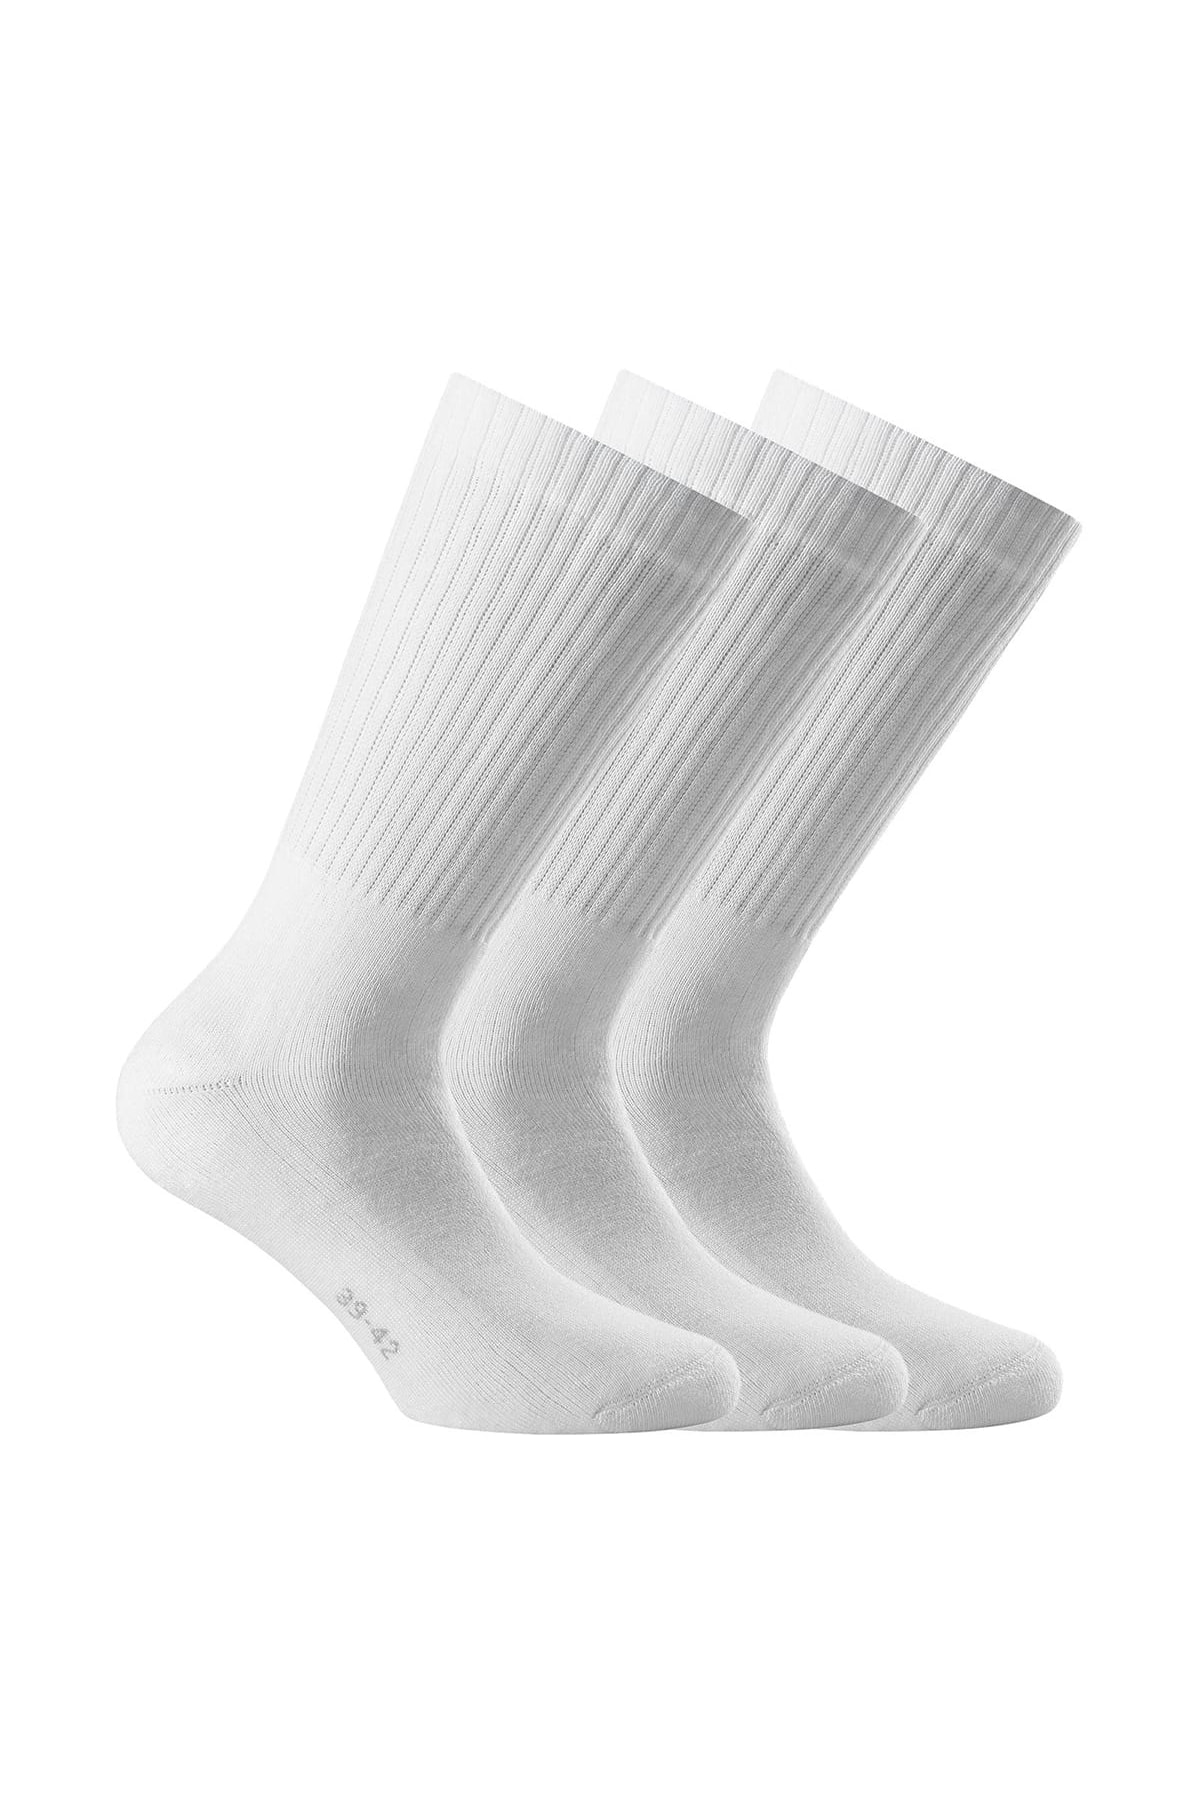 Rohner advanced socks Socken Weiß Sport